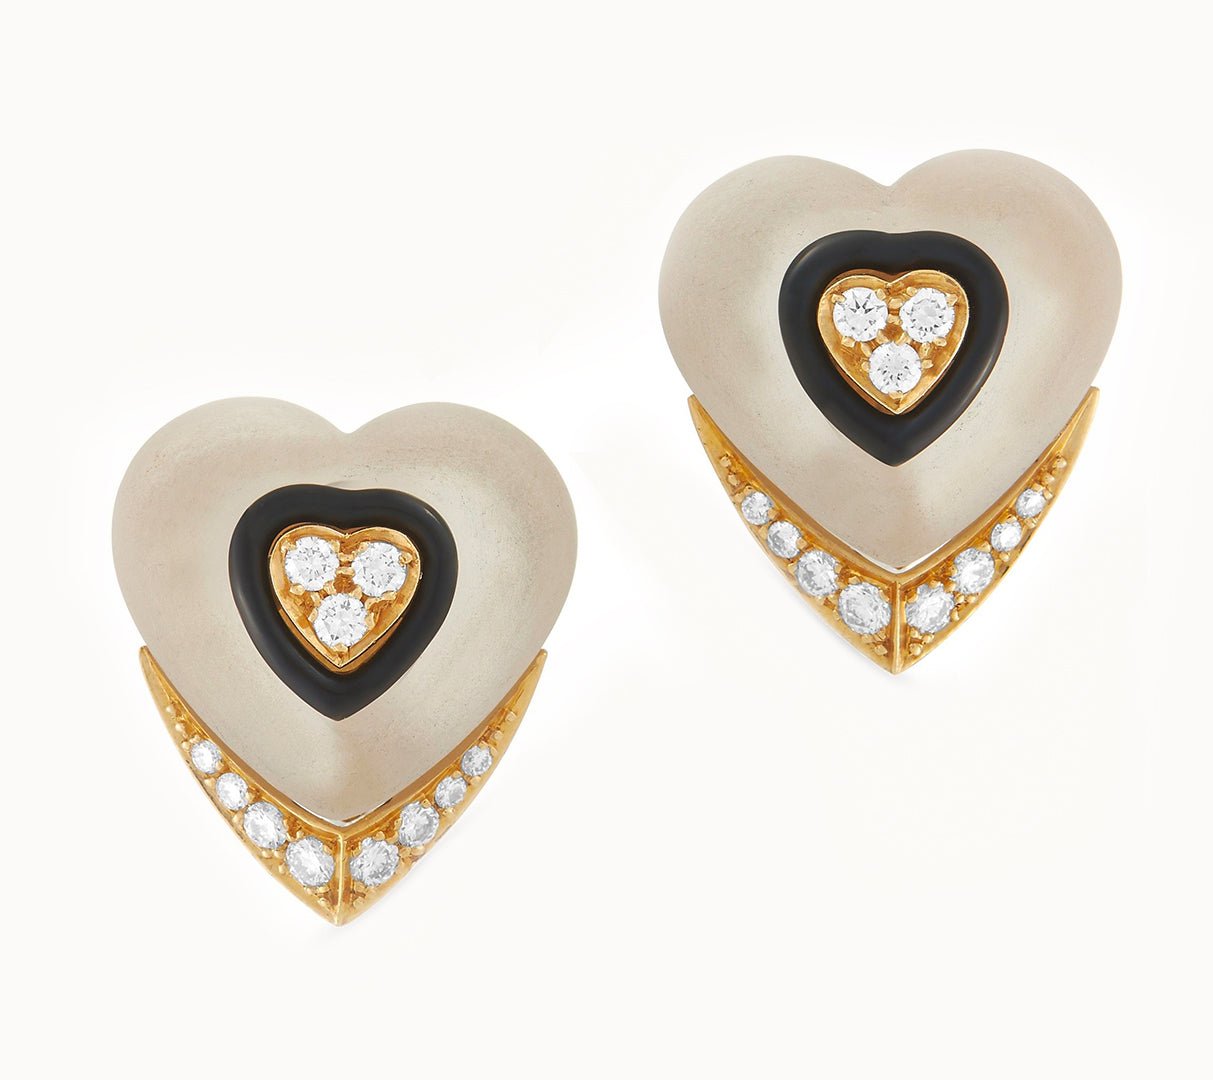 Givenchy 18K Gold Diamond Rock Crystal Earrings